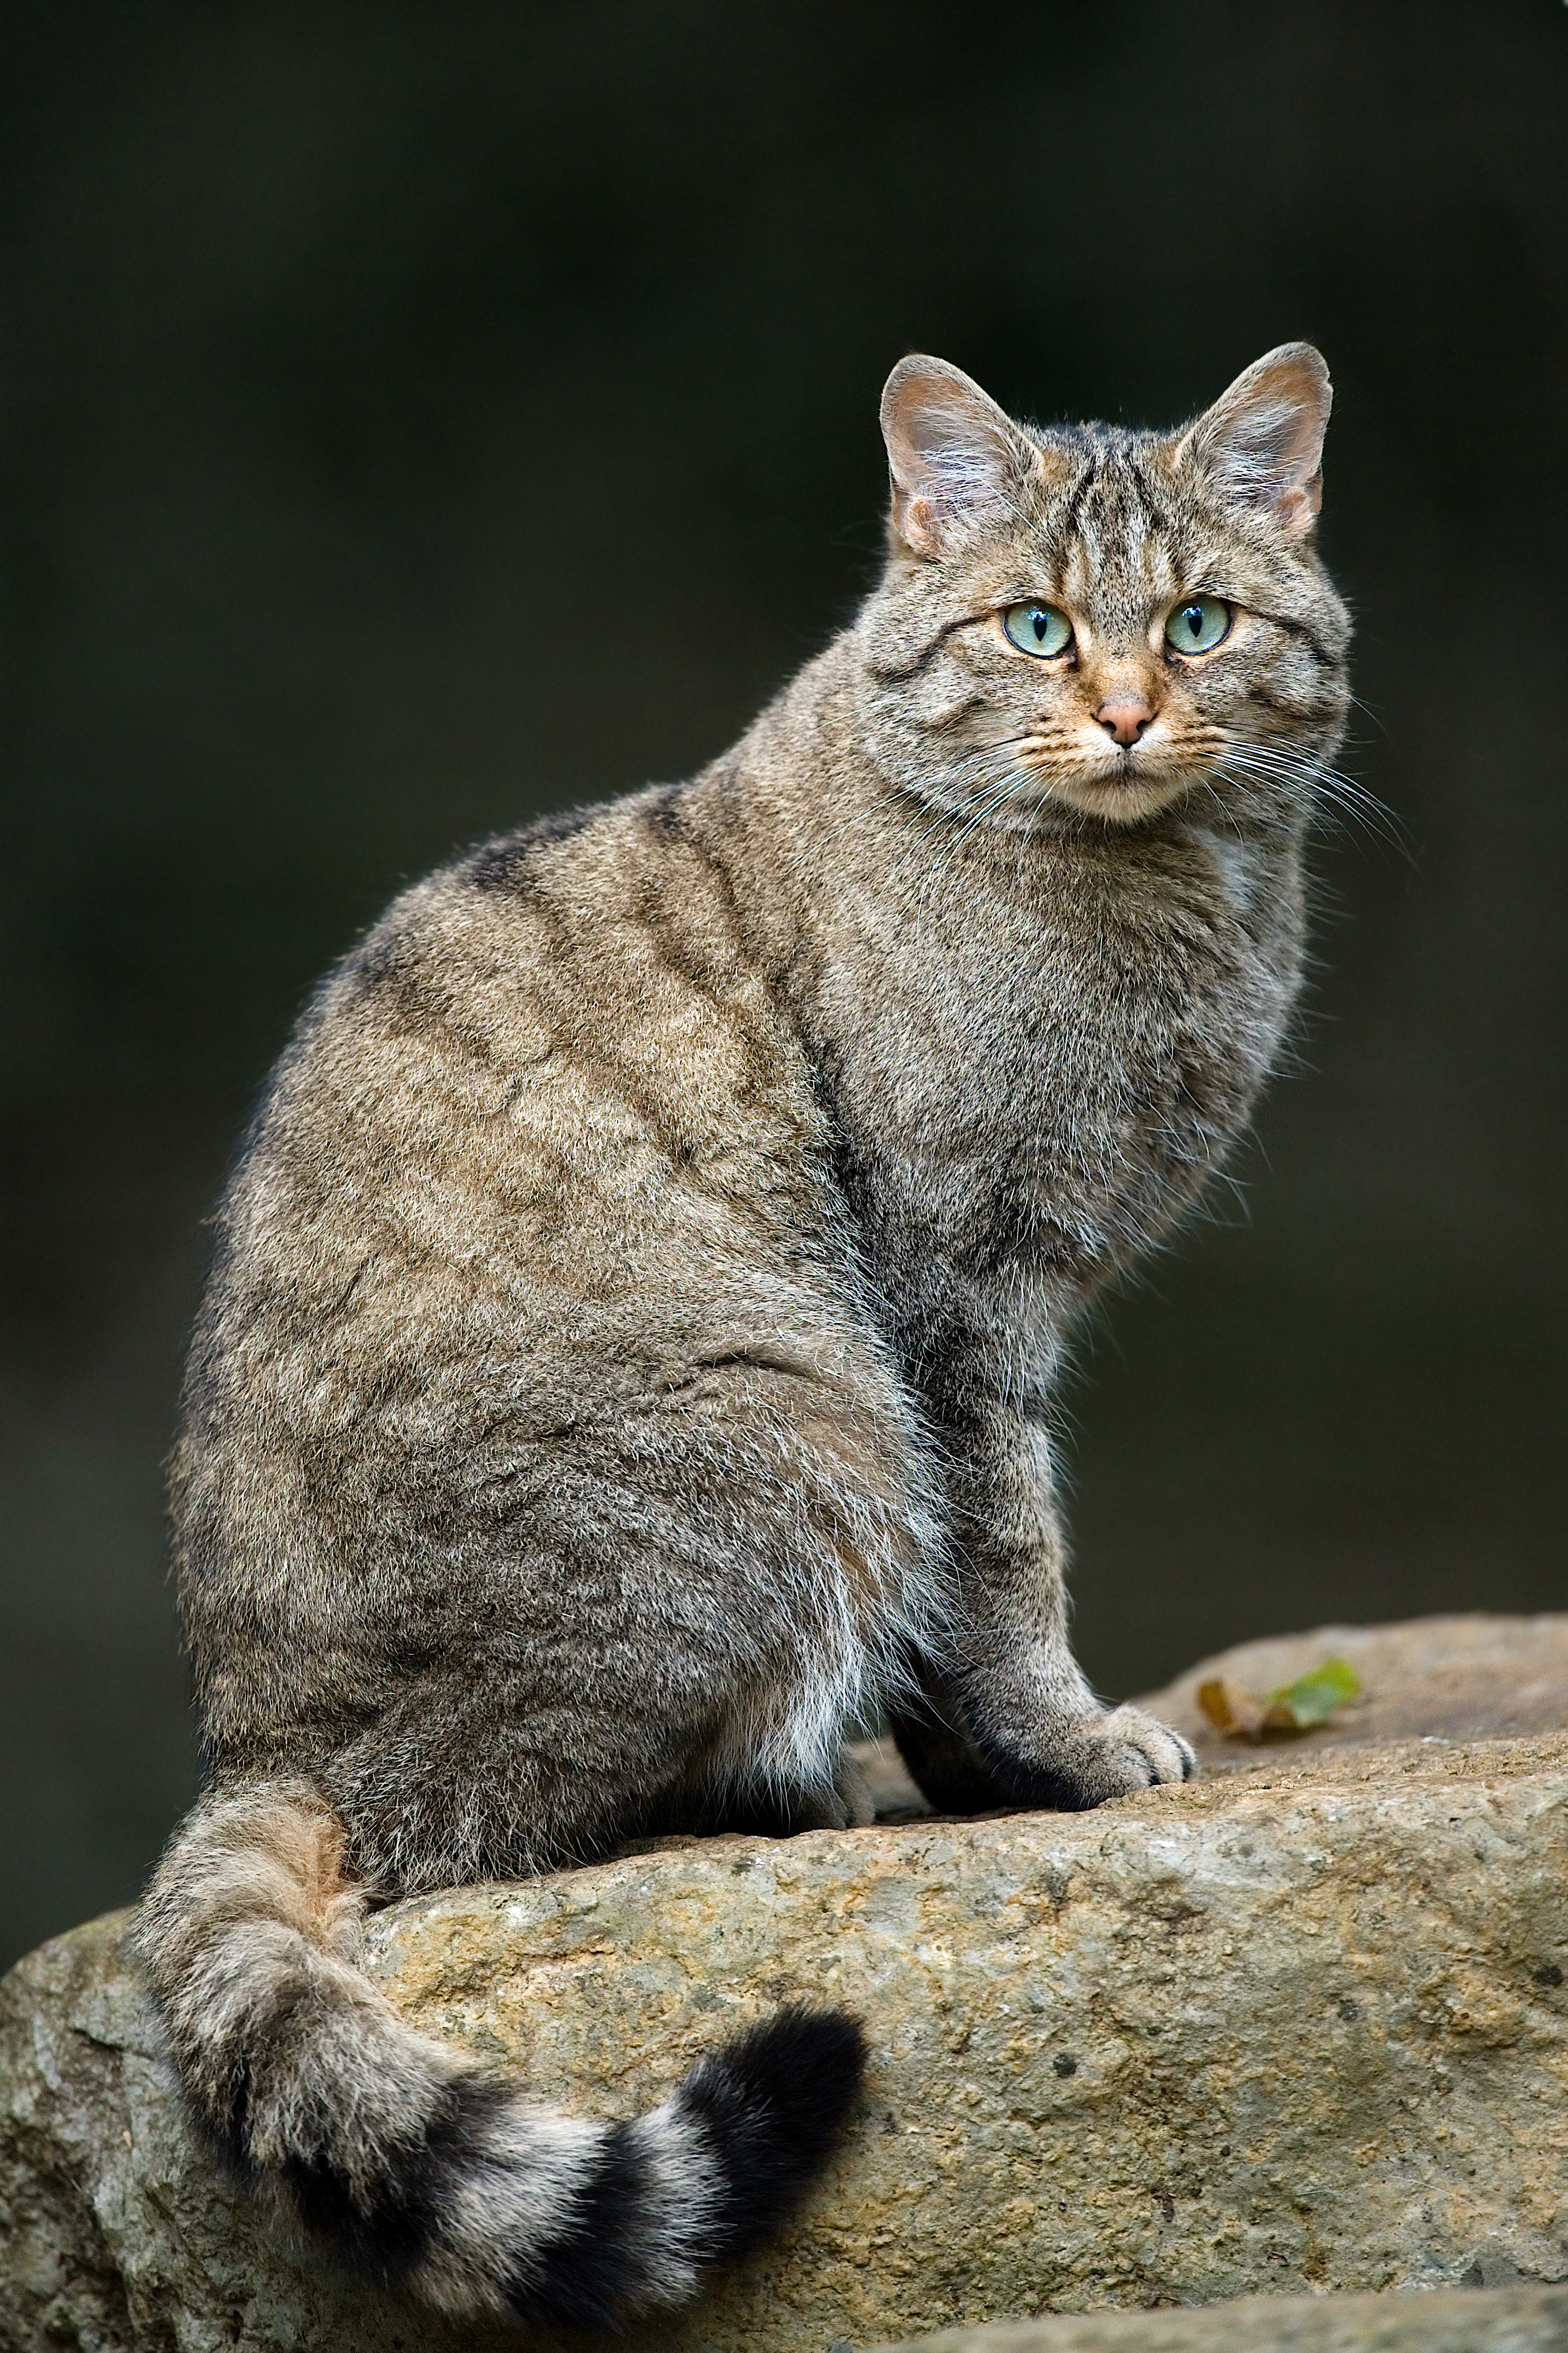 Wildcat - Wikipedia